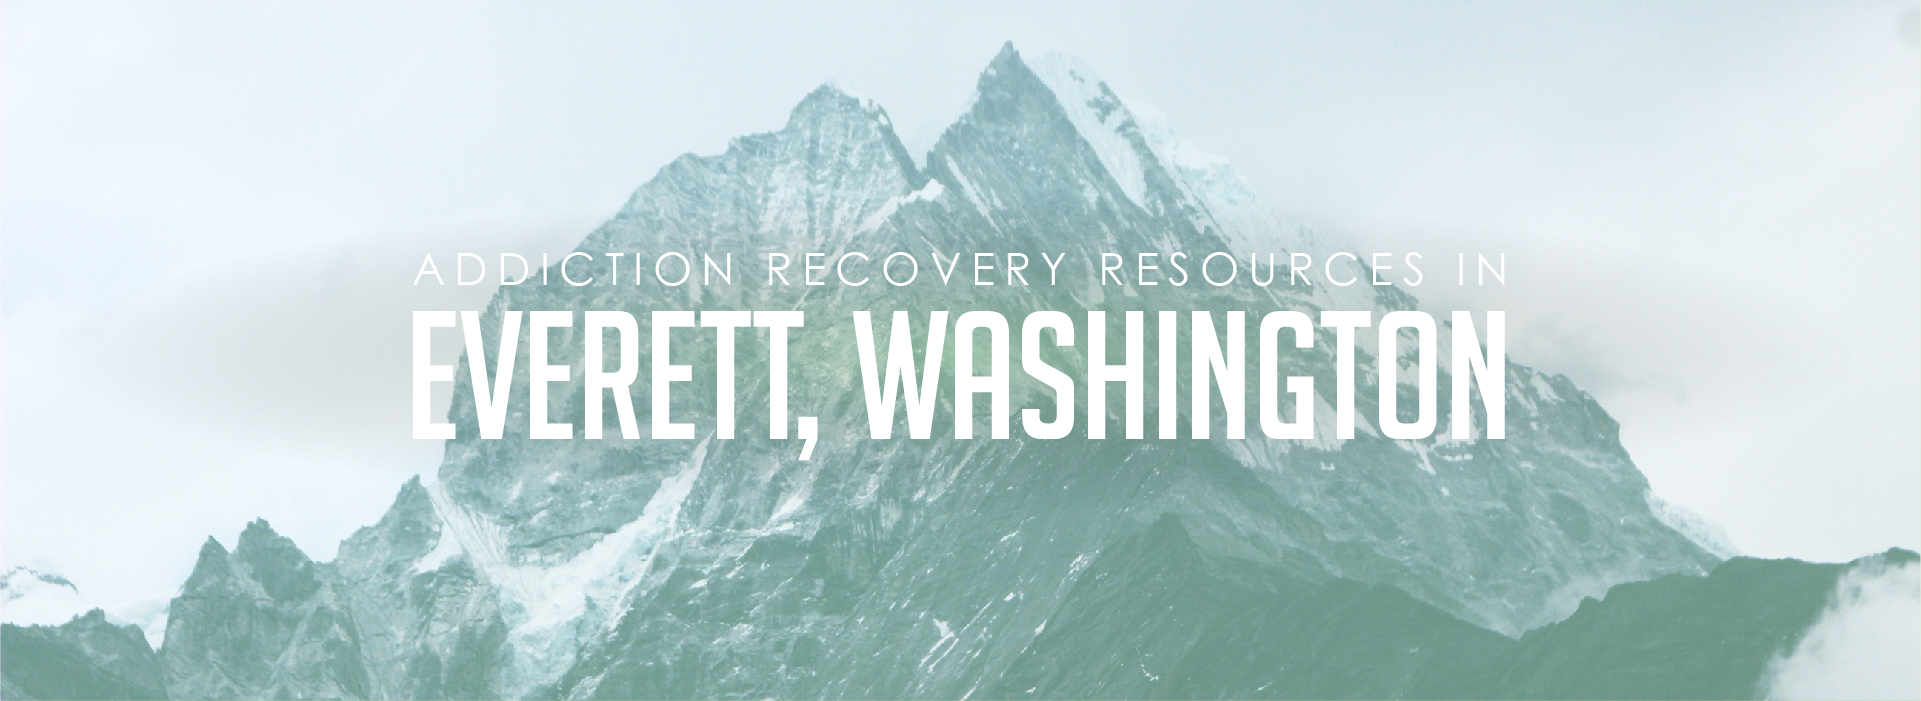 Everett, Washington Addiction Resources